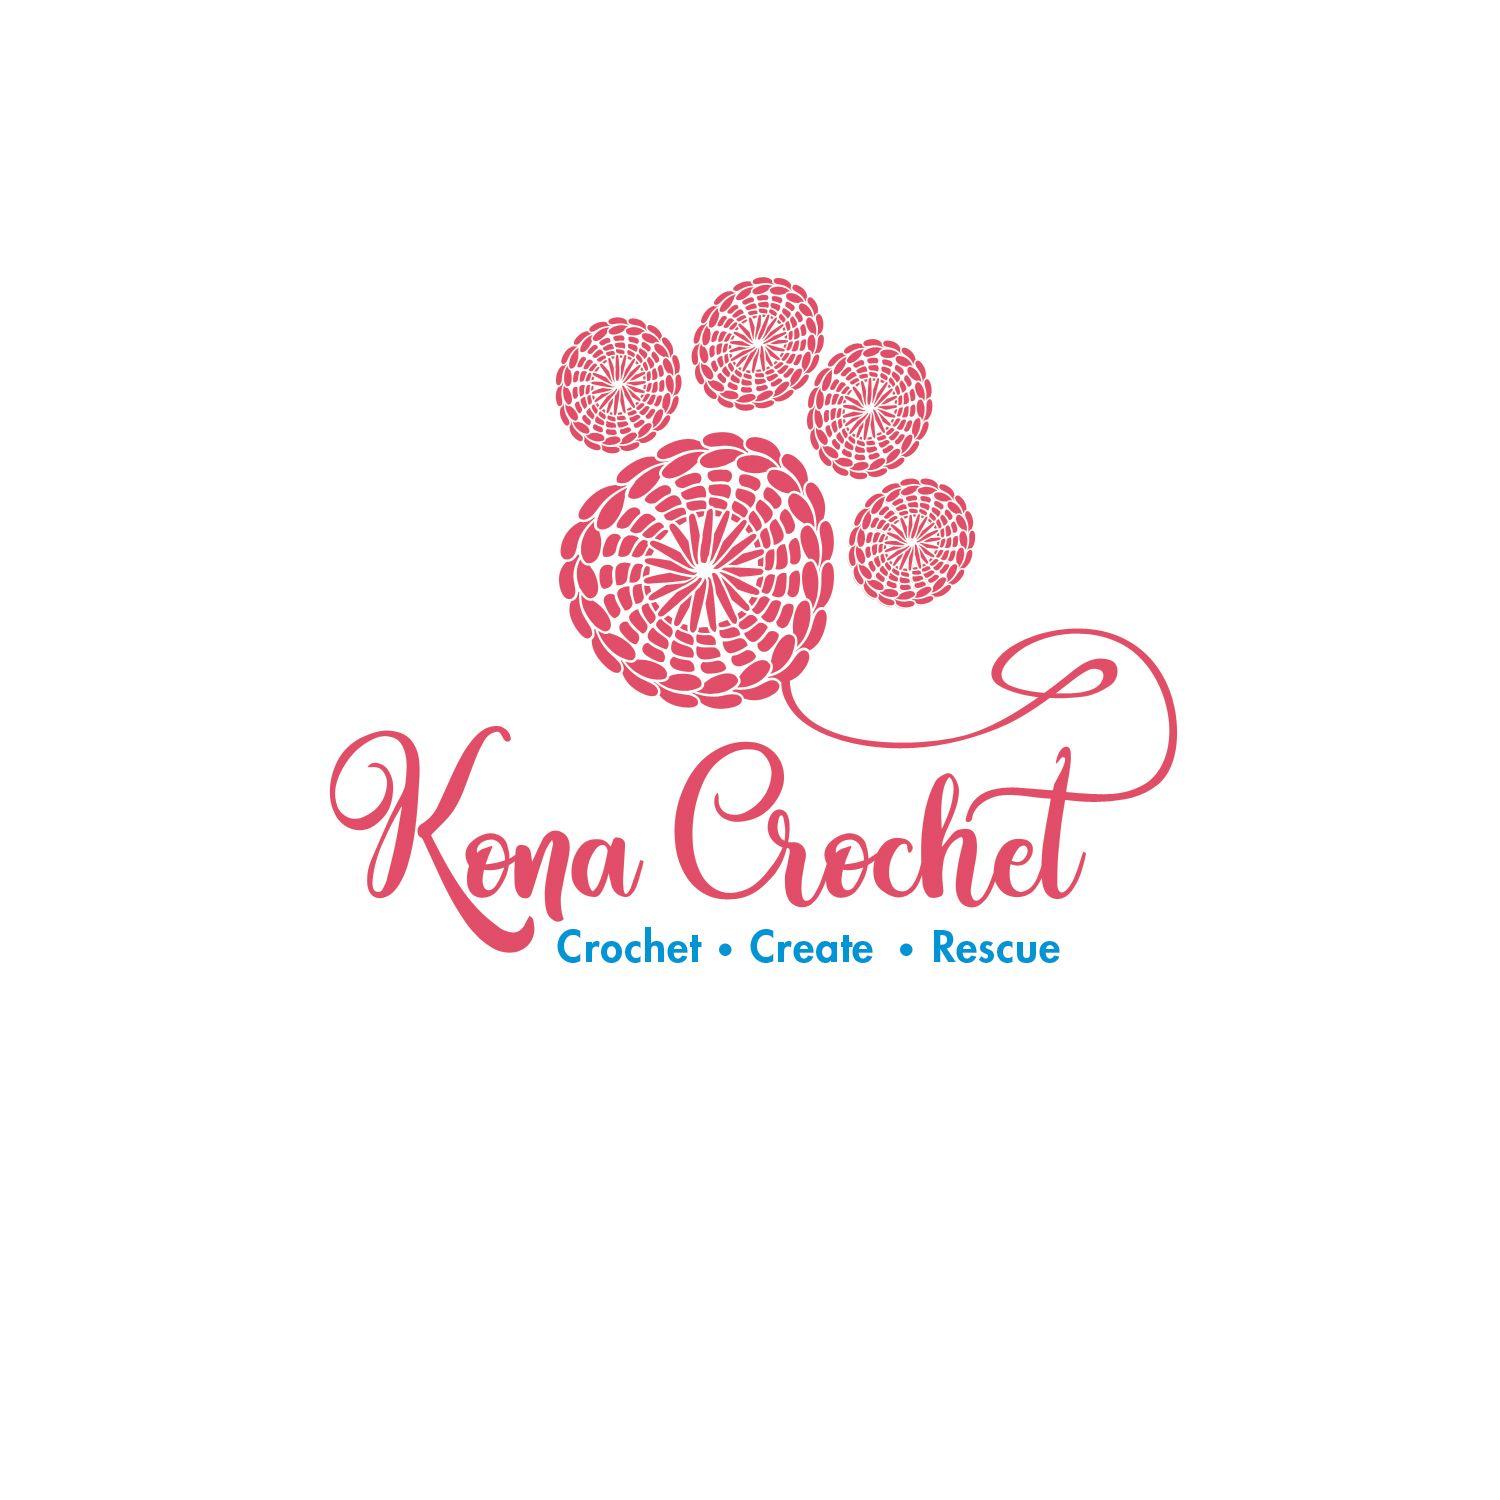 Crochet Logo - Playful, Colorful Logo Design for Kona Crochet by borzoid | Design ...